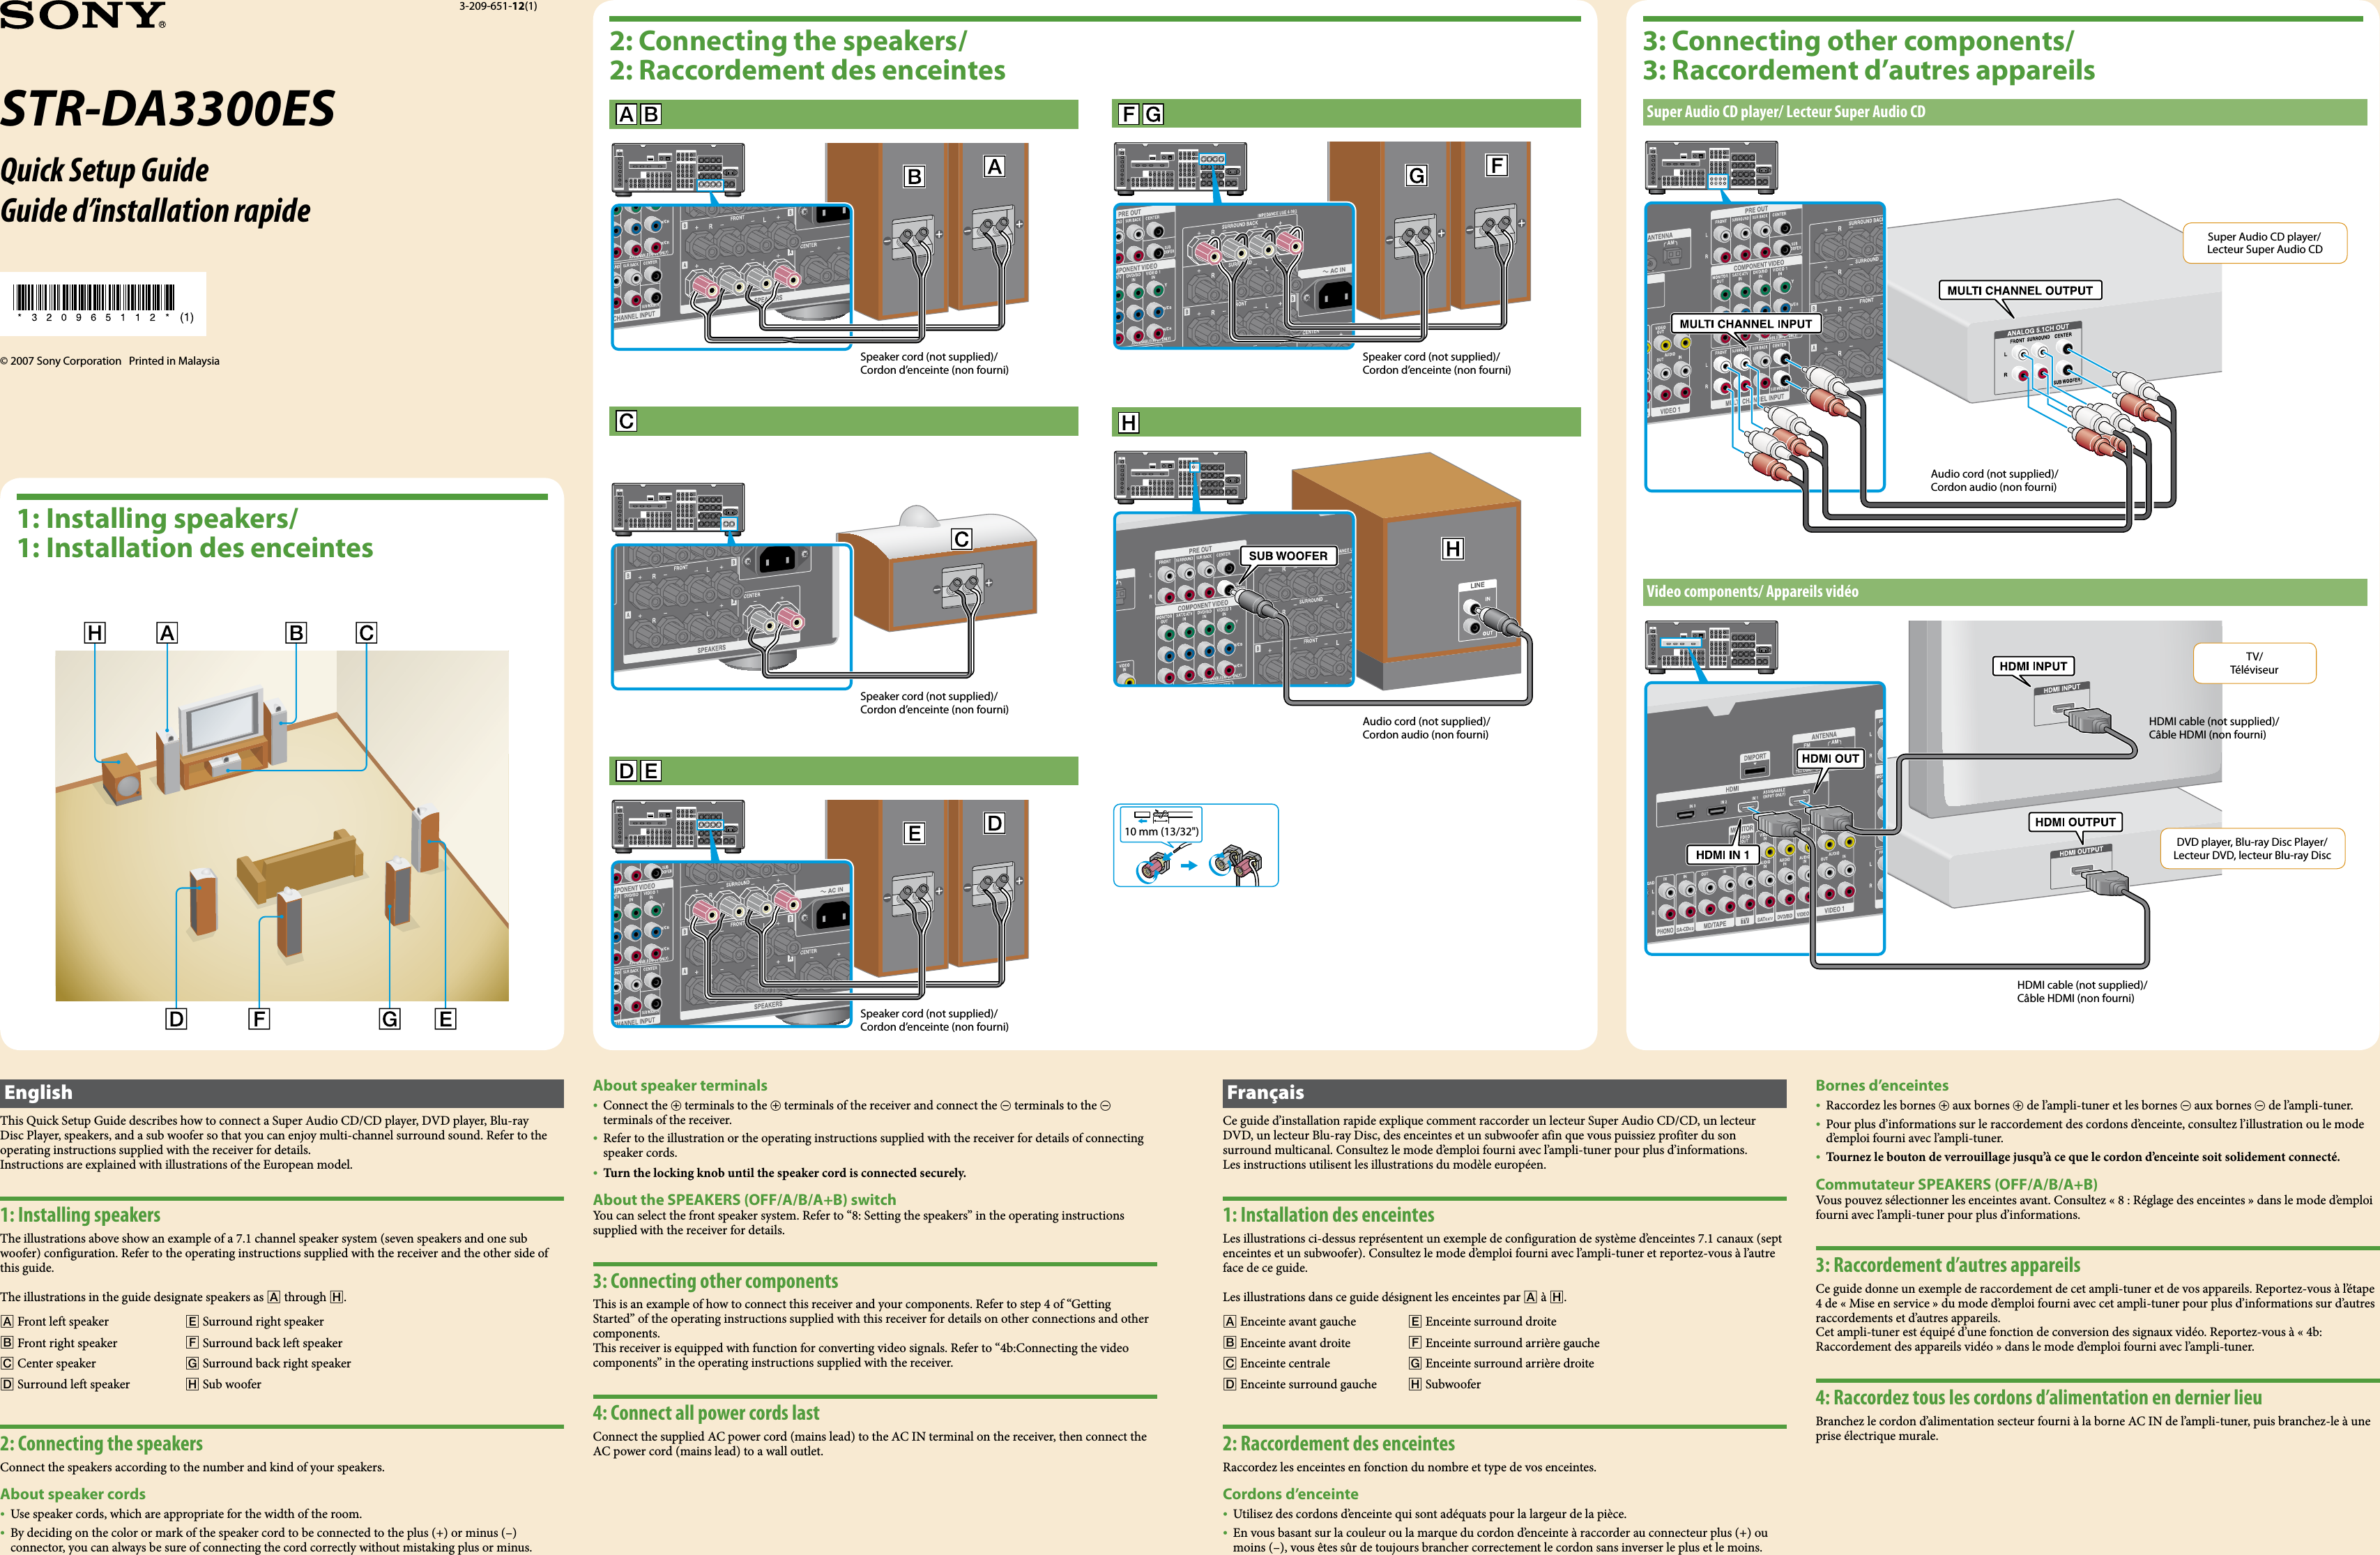 Page 1 of 2 - Sony STR-DA3300ES User Manual Quick Setup Guide